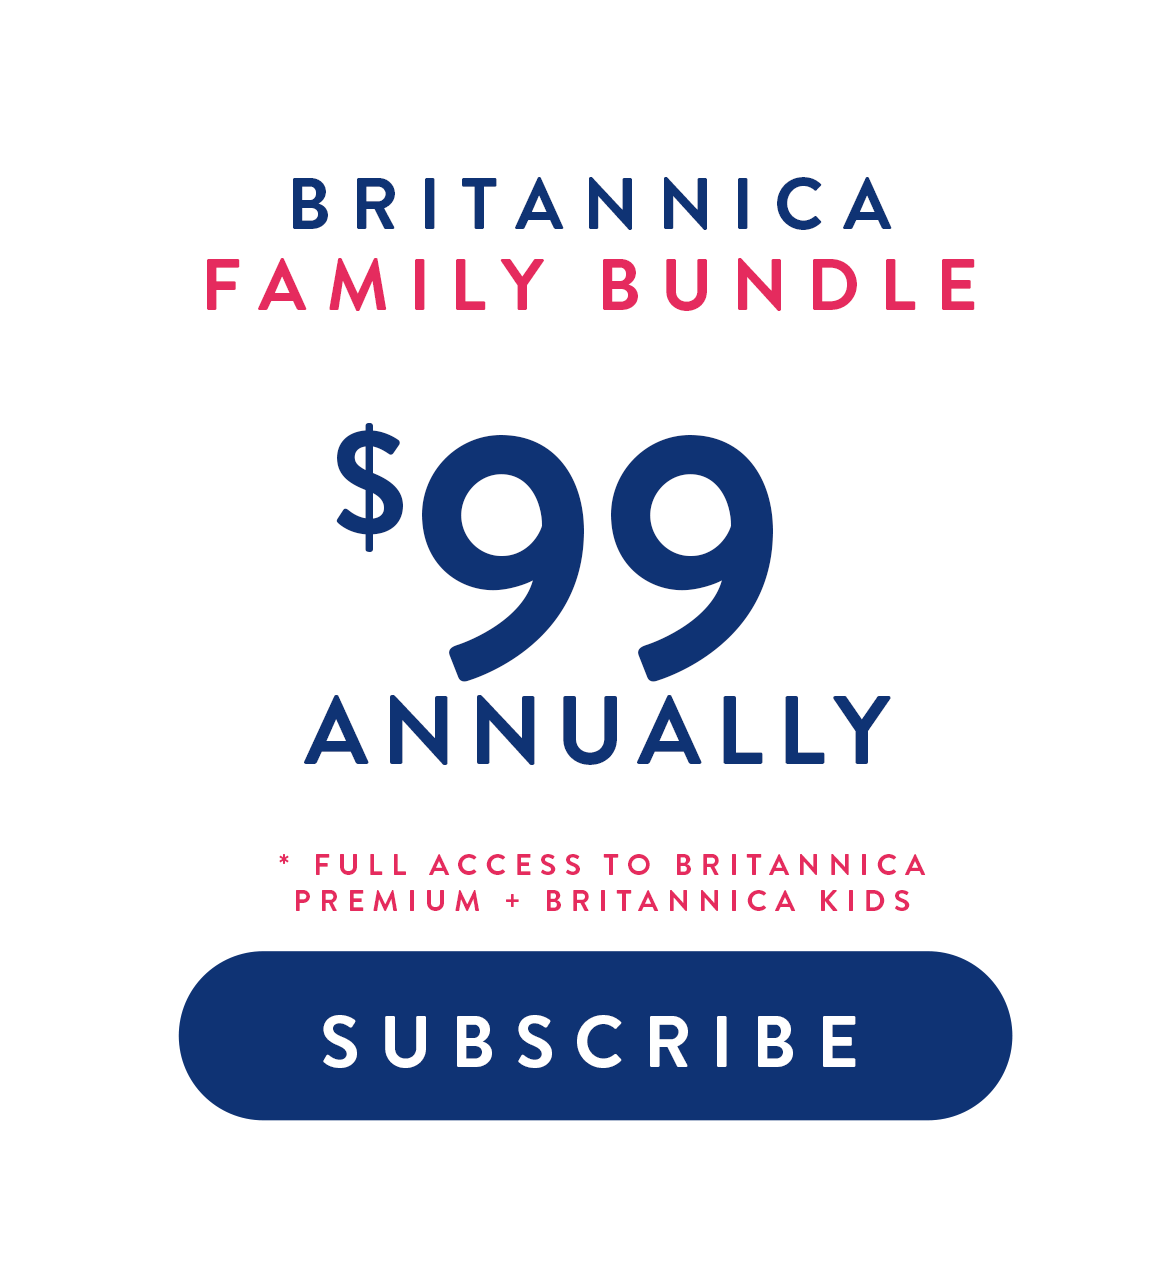 Britannica Family Bundle for $99 Annually